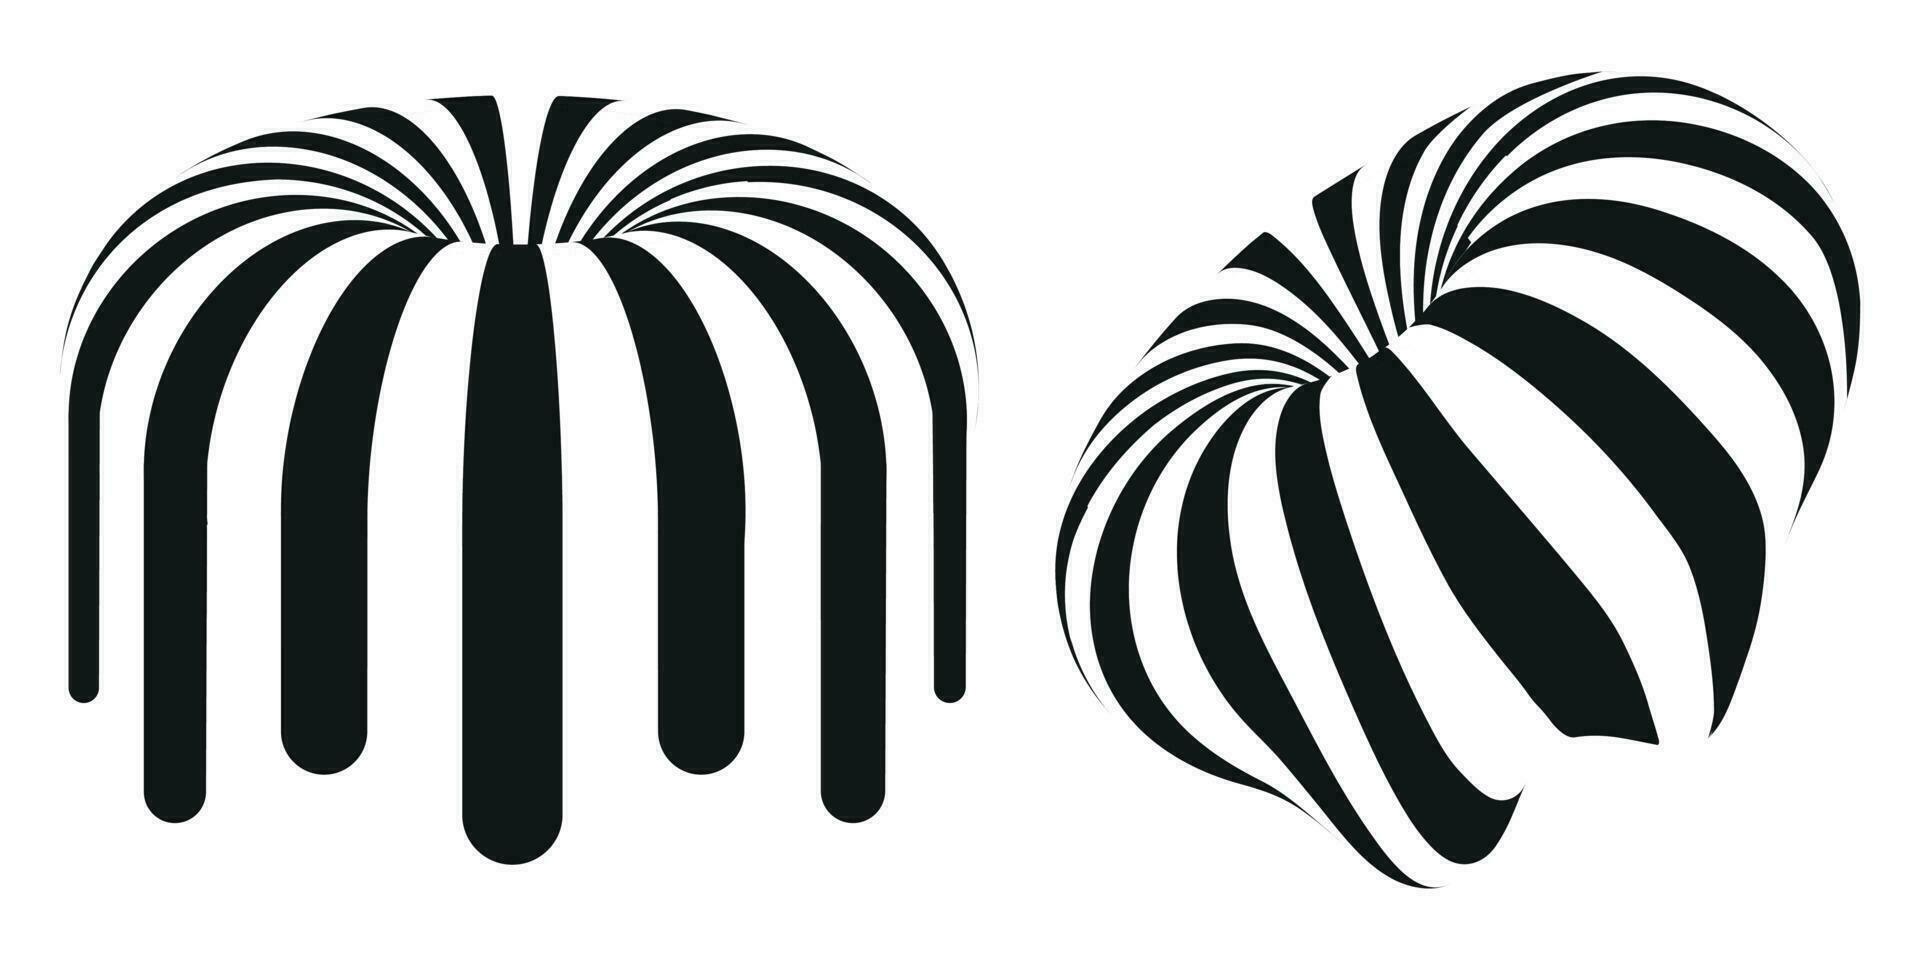 Retro futuristic donut set in 2000s zebra style. Surreal geometric shapes. vector